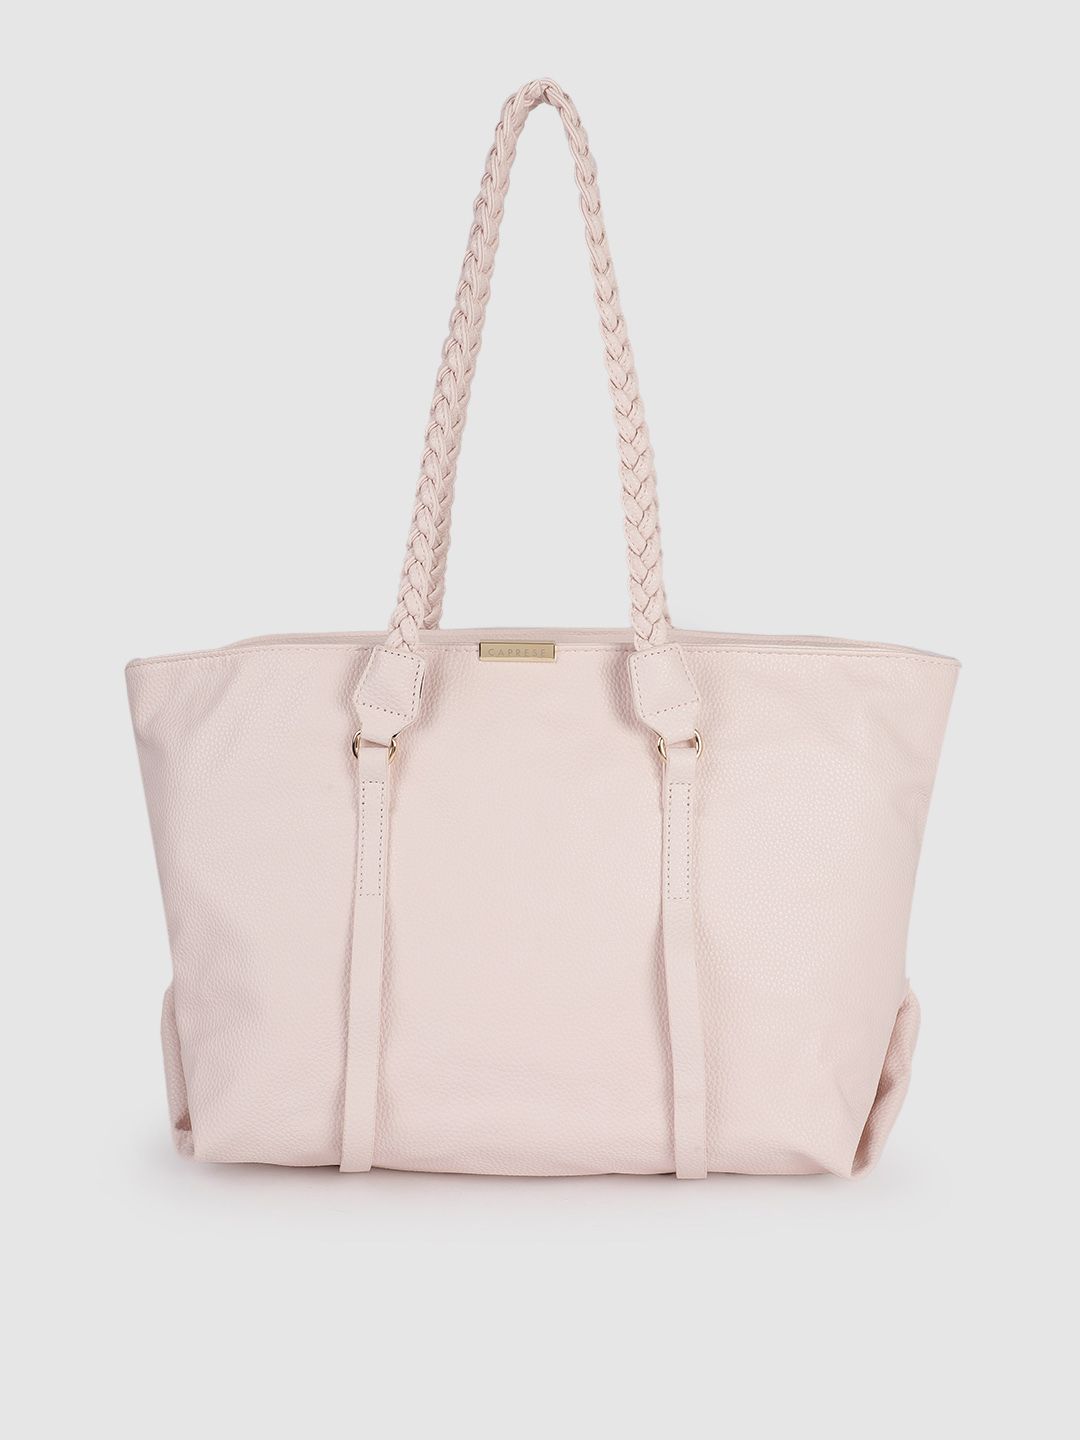 Caprese Pink Textured Structured Shoulder Bag Price in India